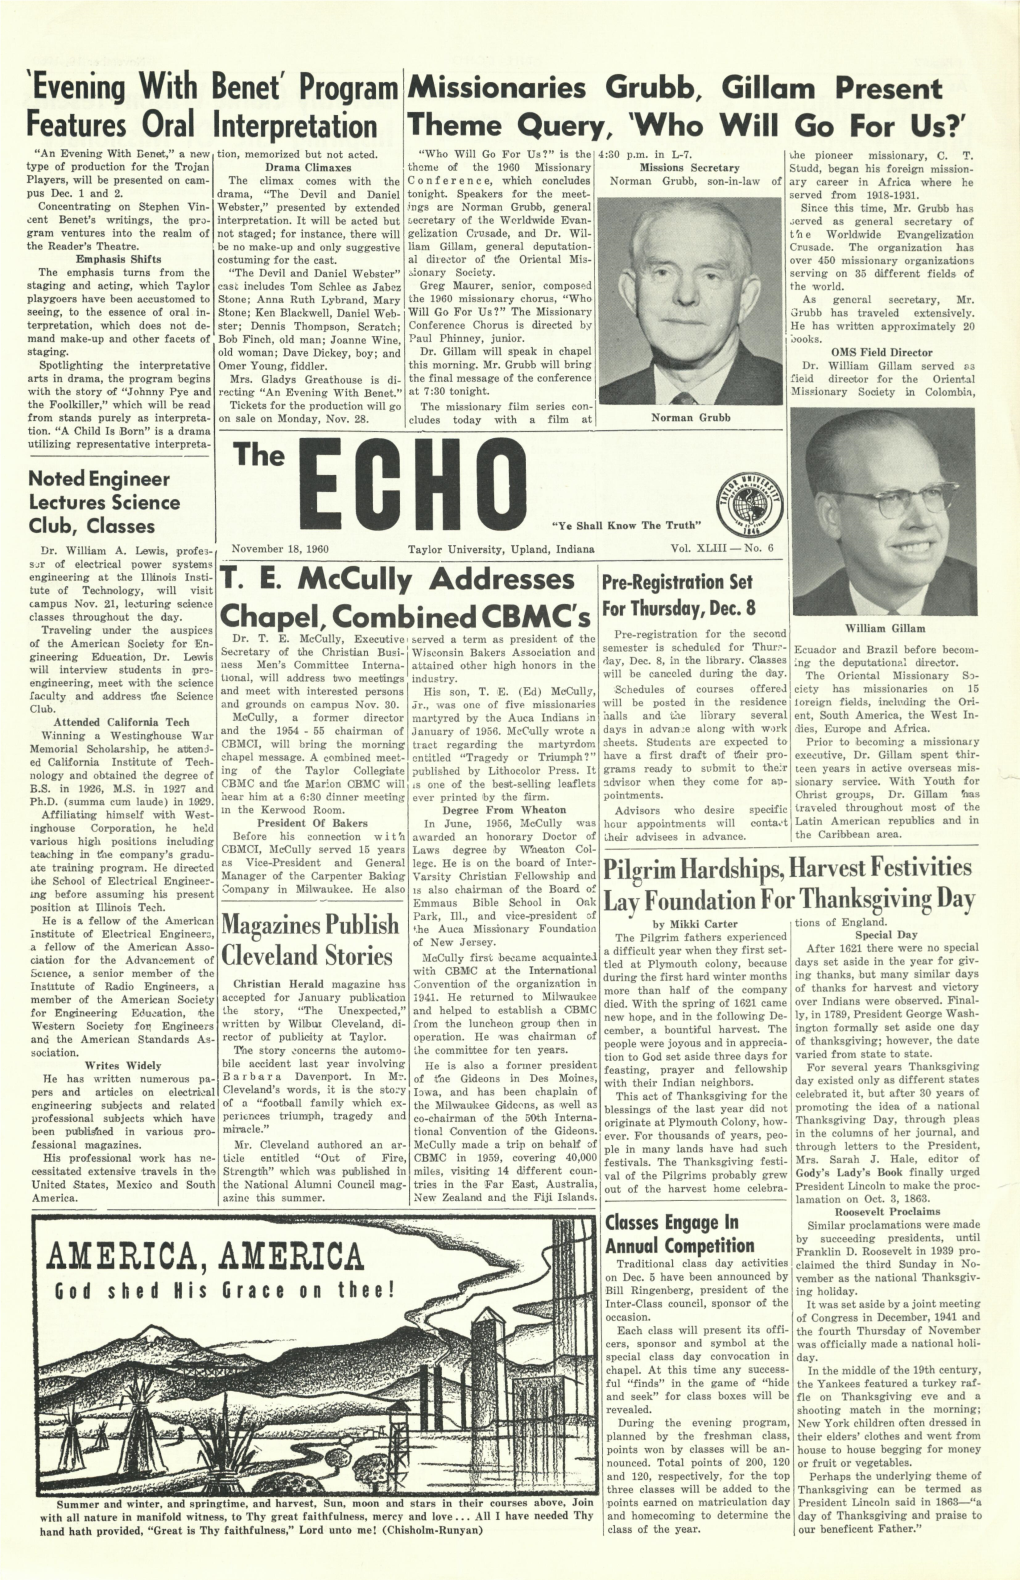 The Echo: November 18, 1960